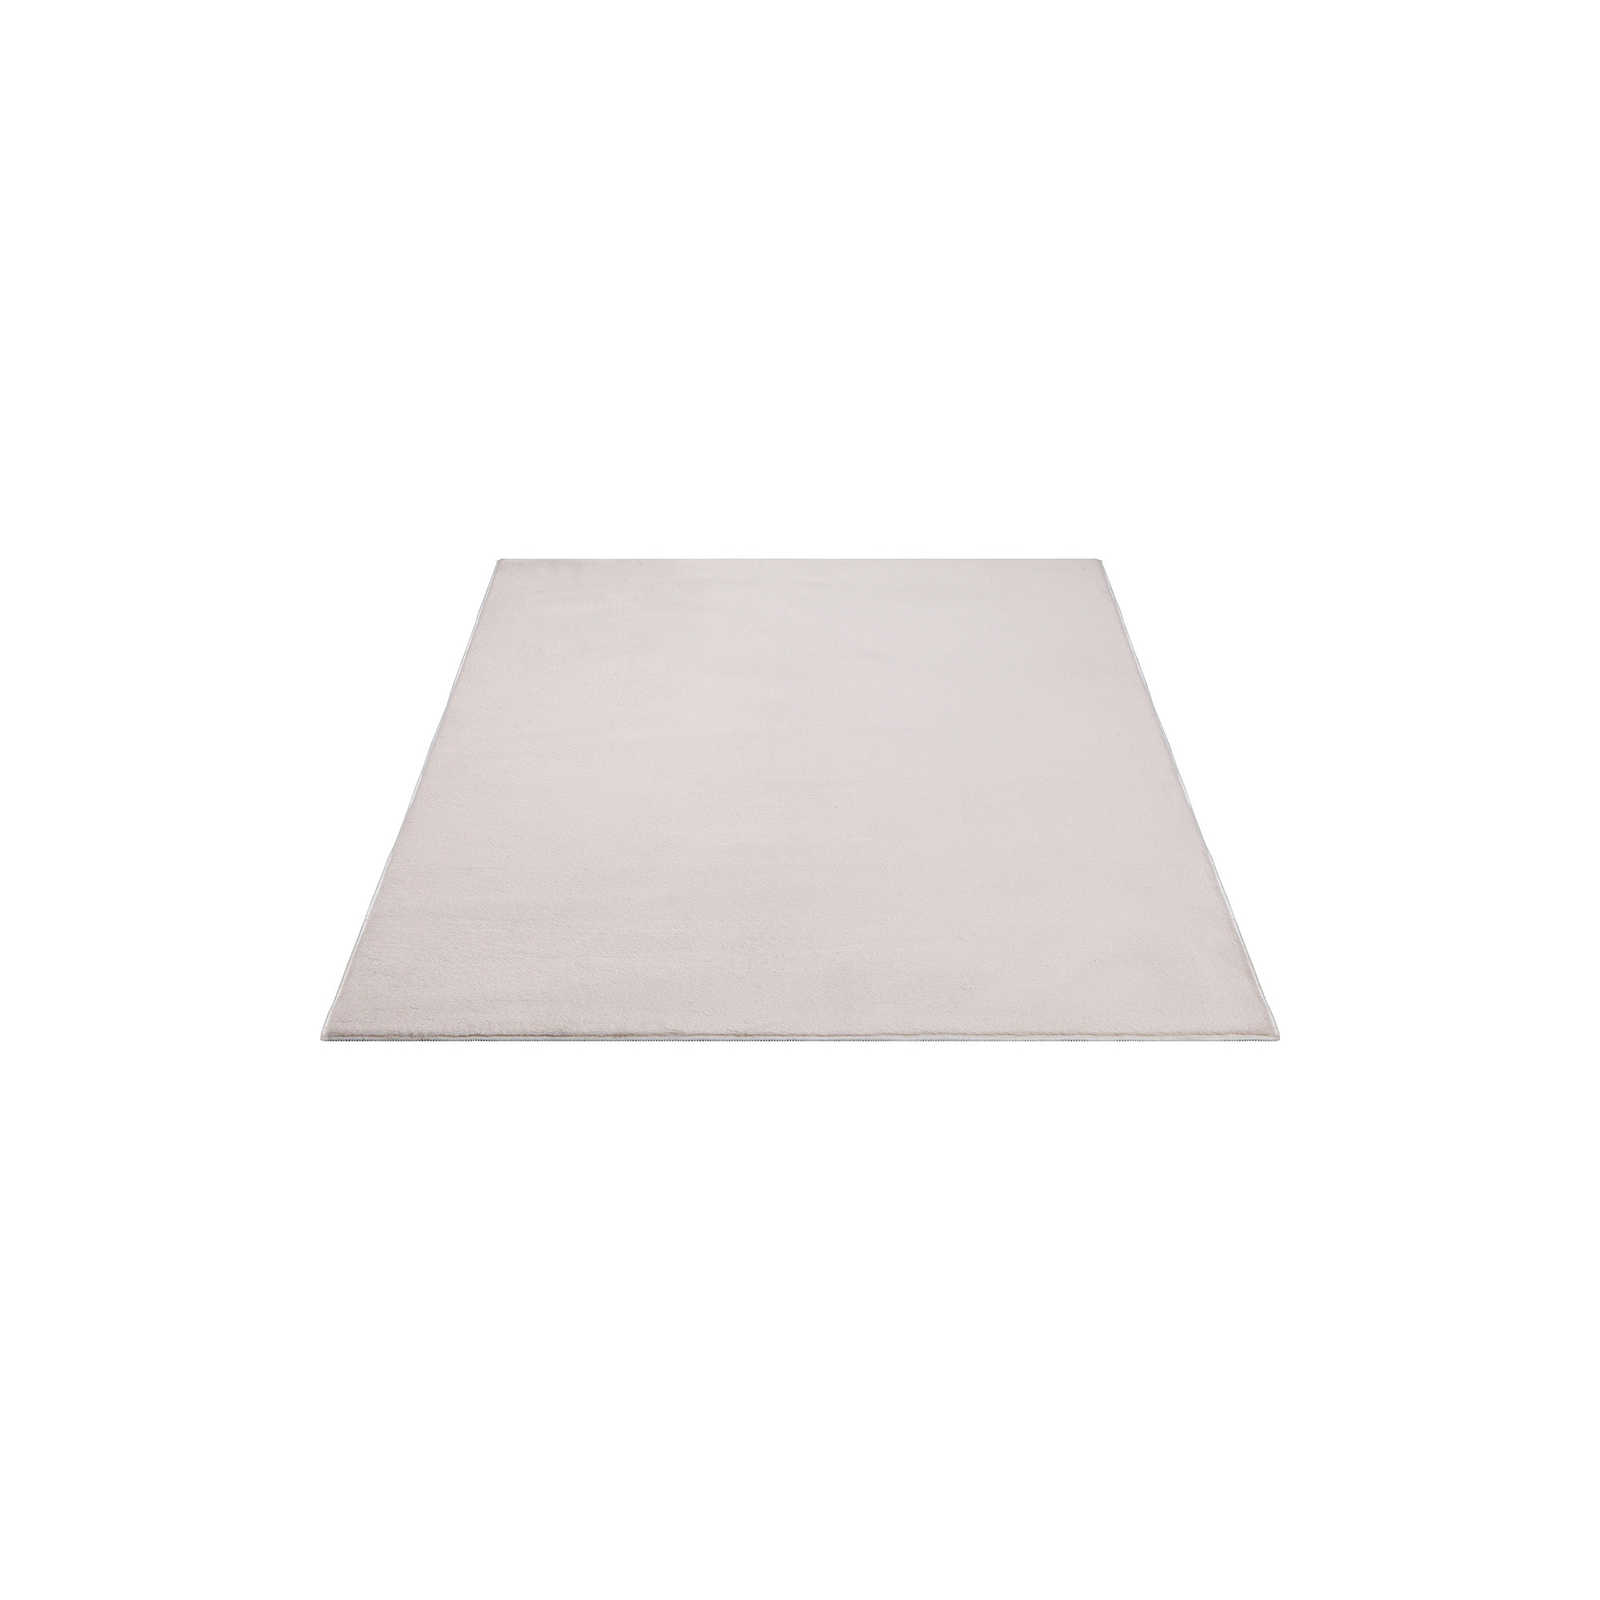 Plain high pile carpet in soft beige - 200 x 140 cm
